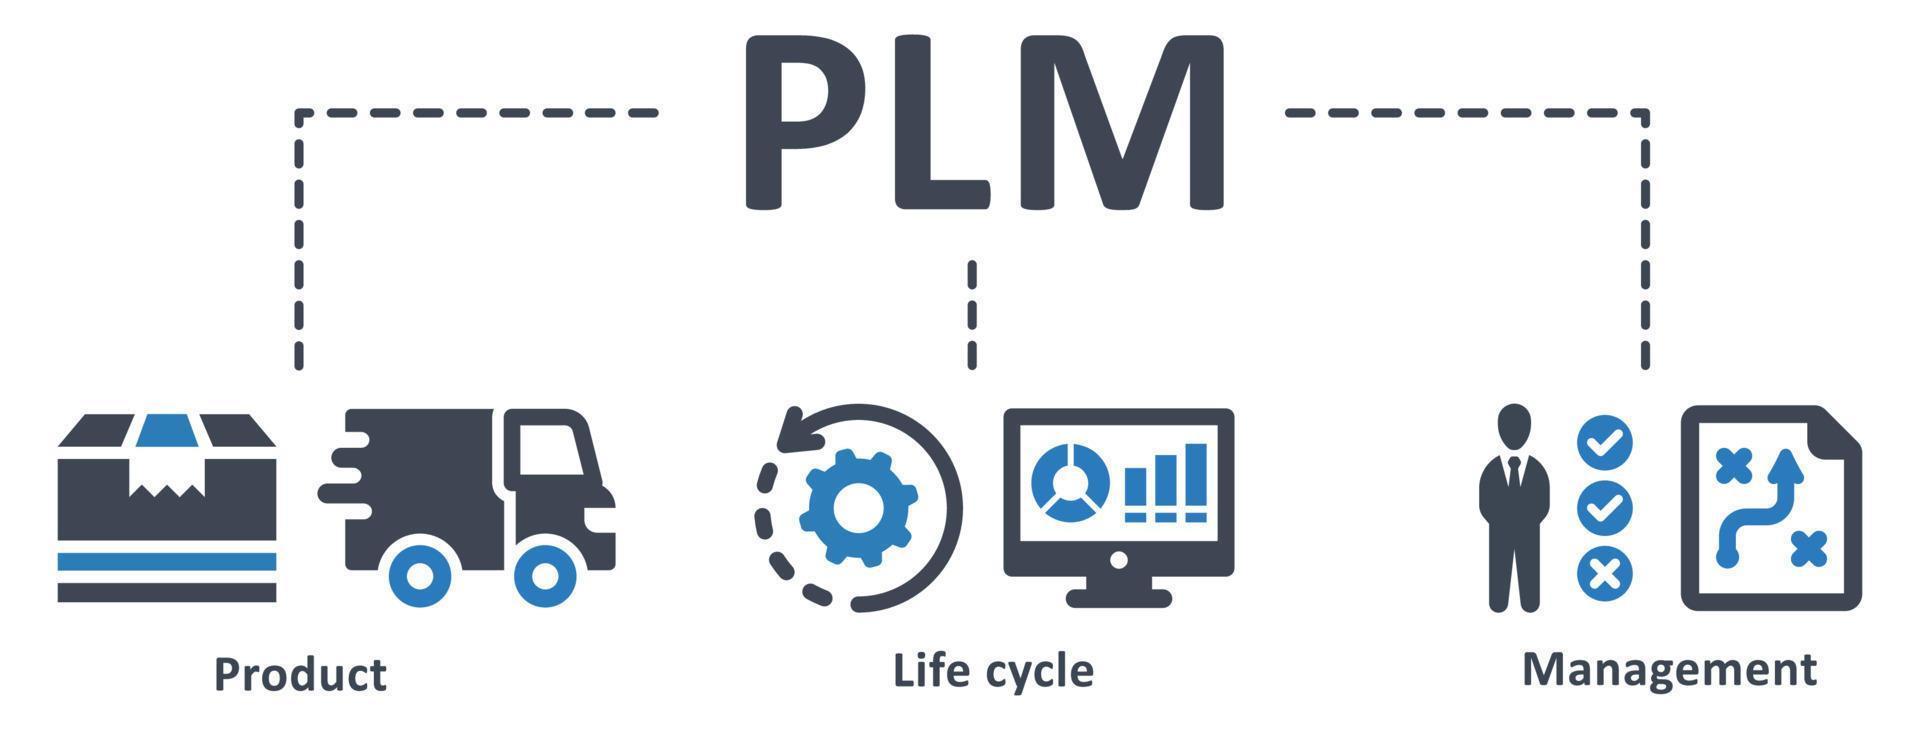 Plm-Symbol - Vektorillustration. plm, produkt, lebenszyklus, management, innovation, entwicklung, herstellung, lieferung, planung, strategie, infografik, vorlage, konzept, banner, symbolsatz, symbole . vektor